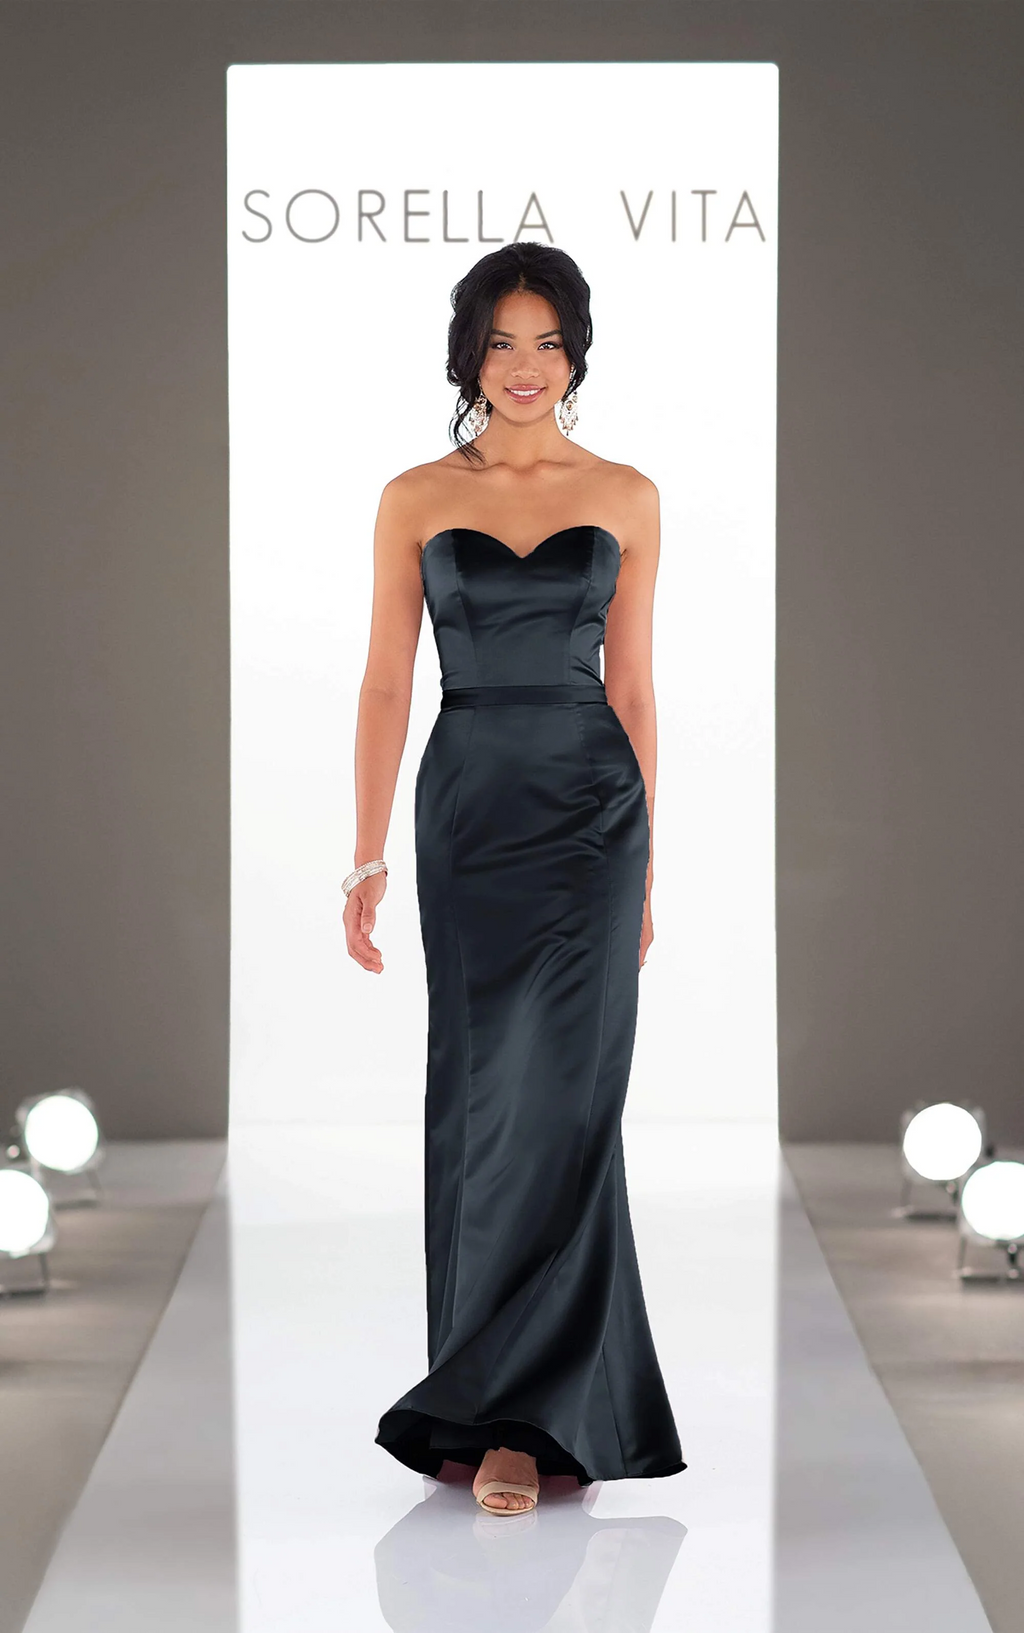 Sorella Vita Dress Style 9166 (Navy-Size 10) Prom, Ball., Black-tie, Bridesmaid, Pageant